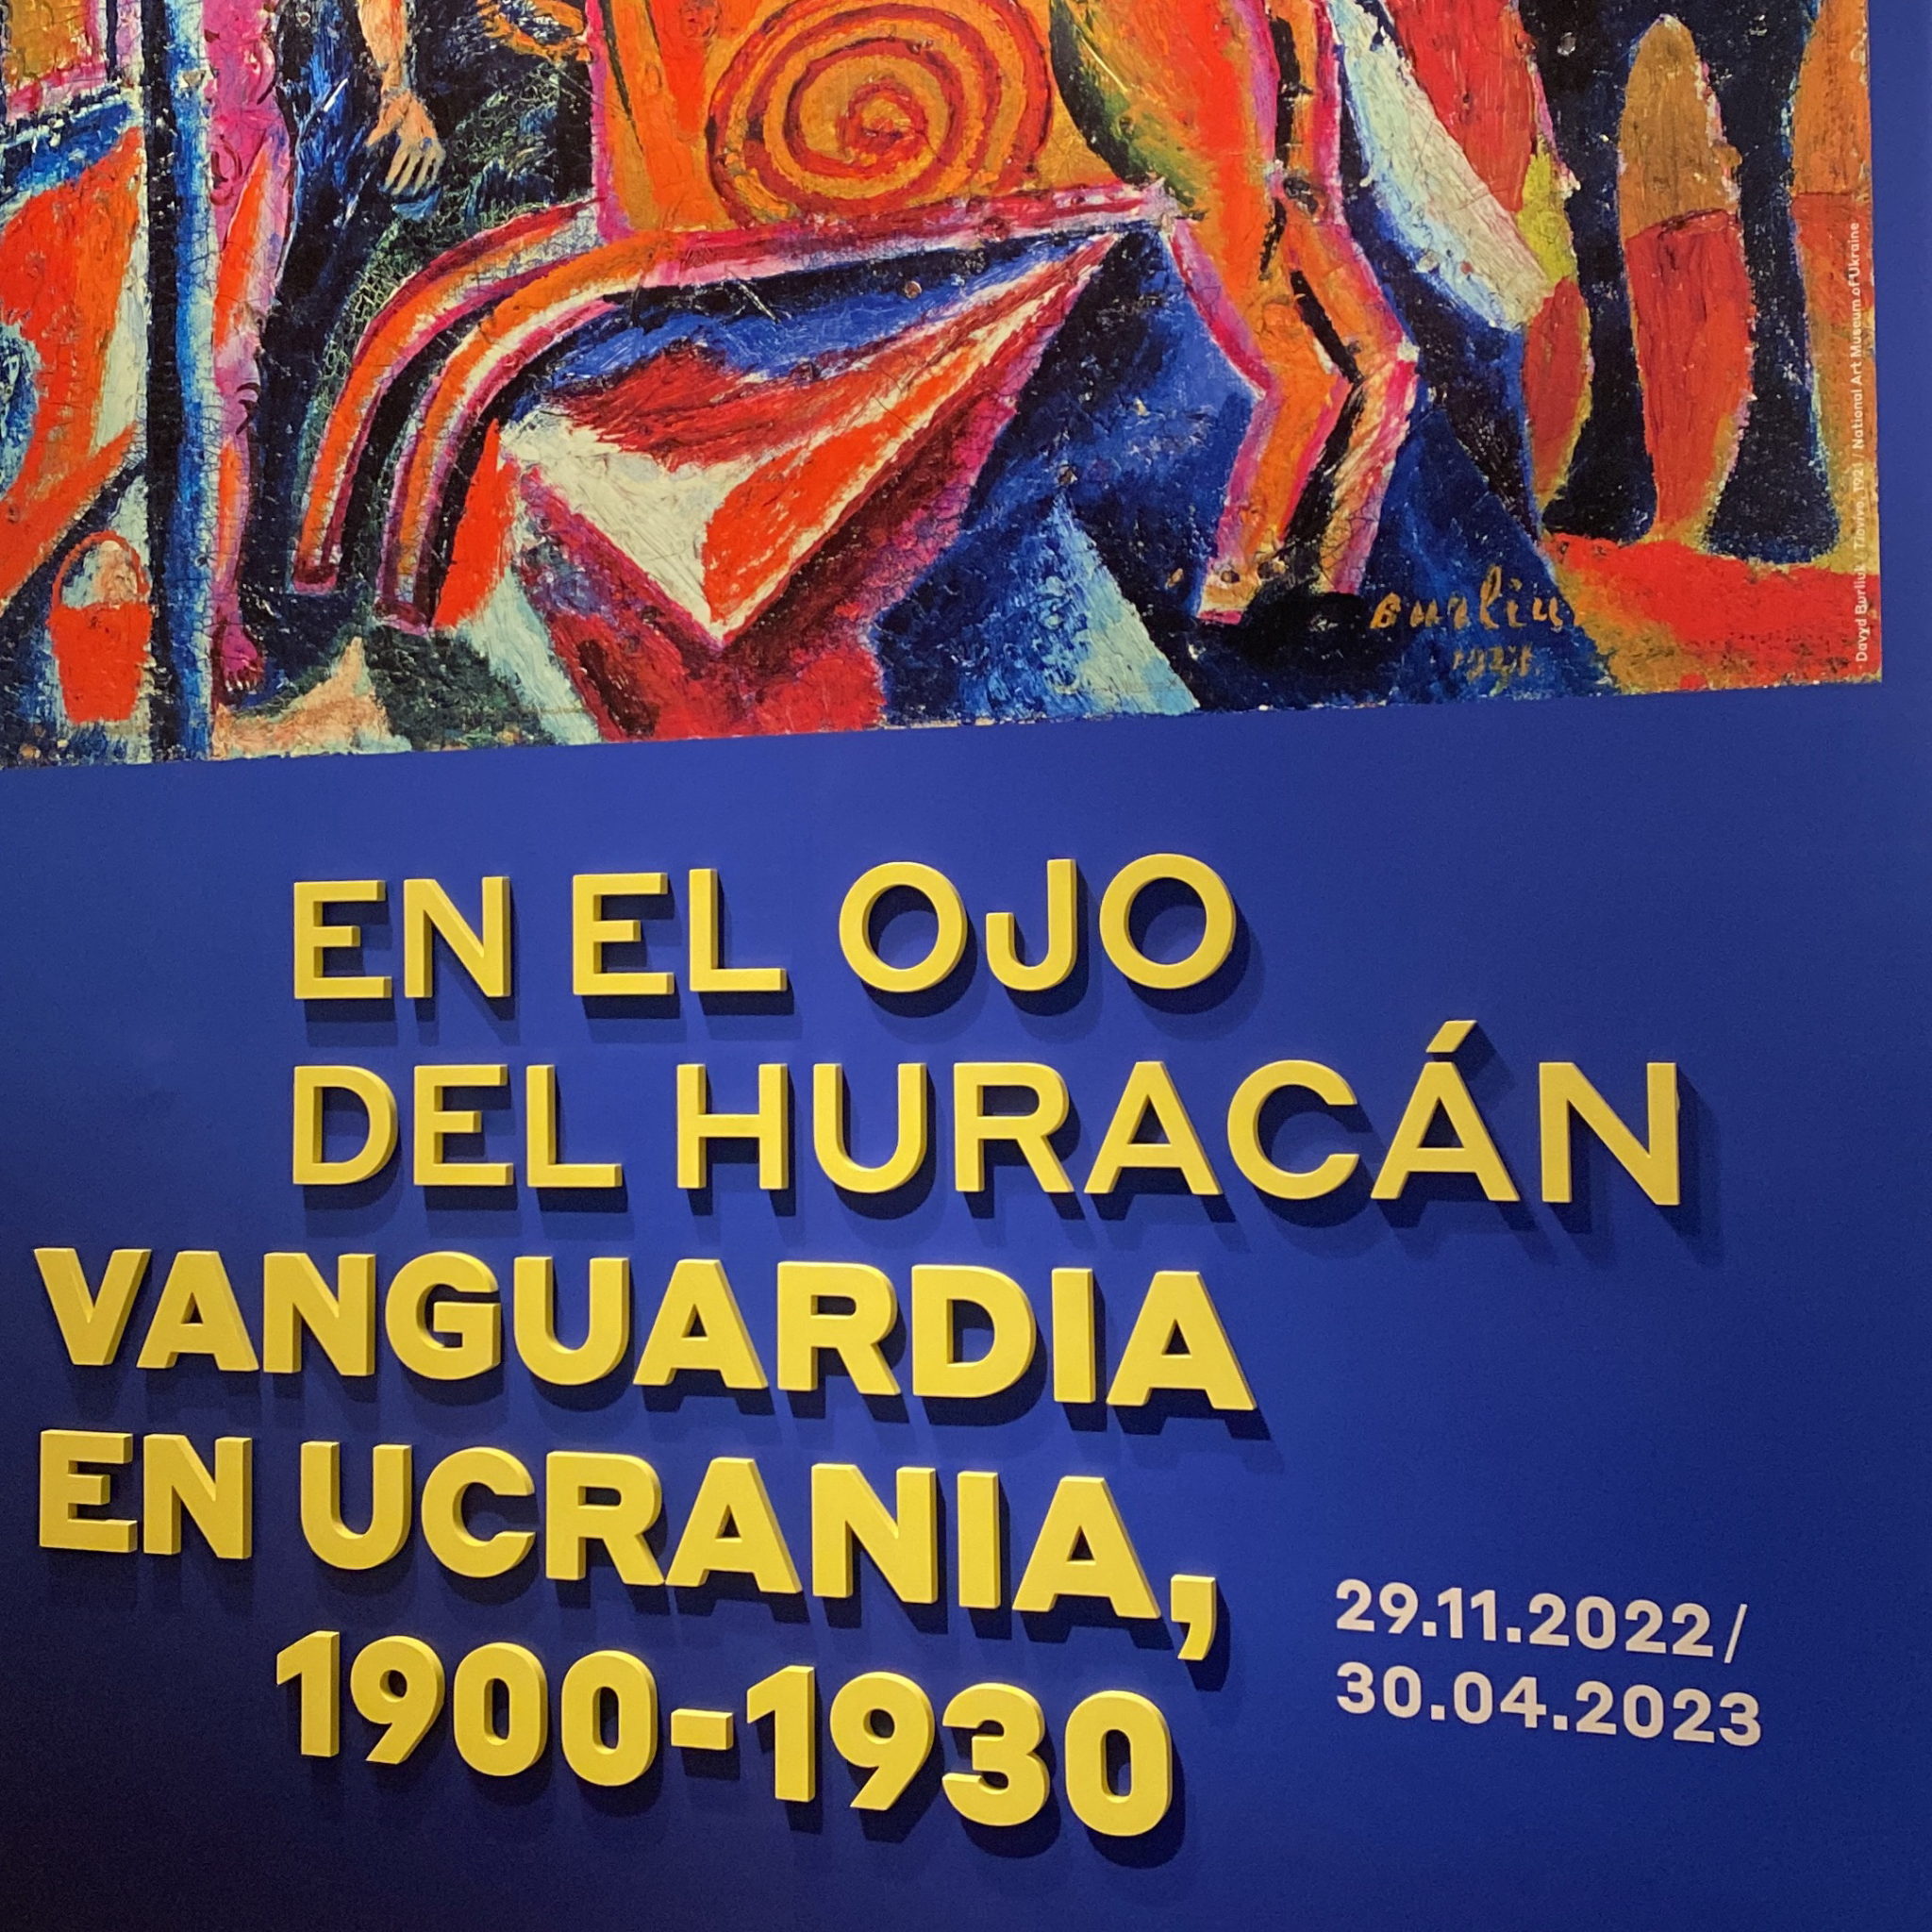 Exhibition of Ukrainian Art at Thyssen-Bornemisza National Museum